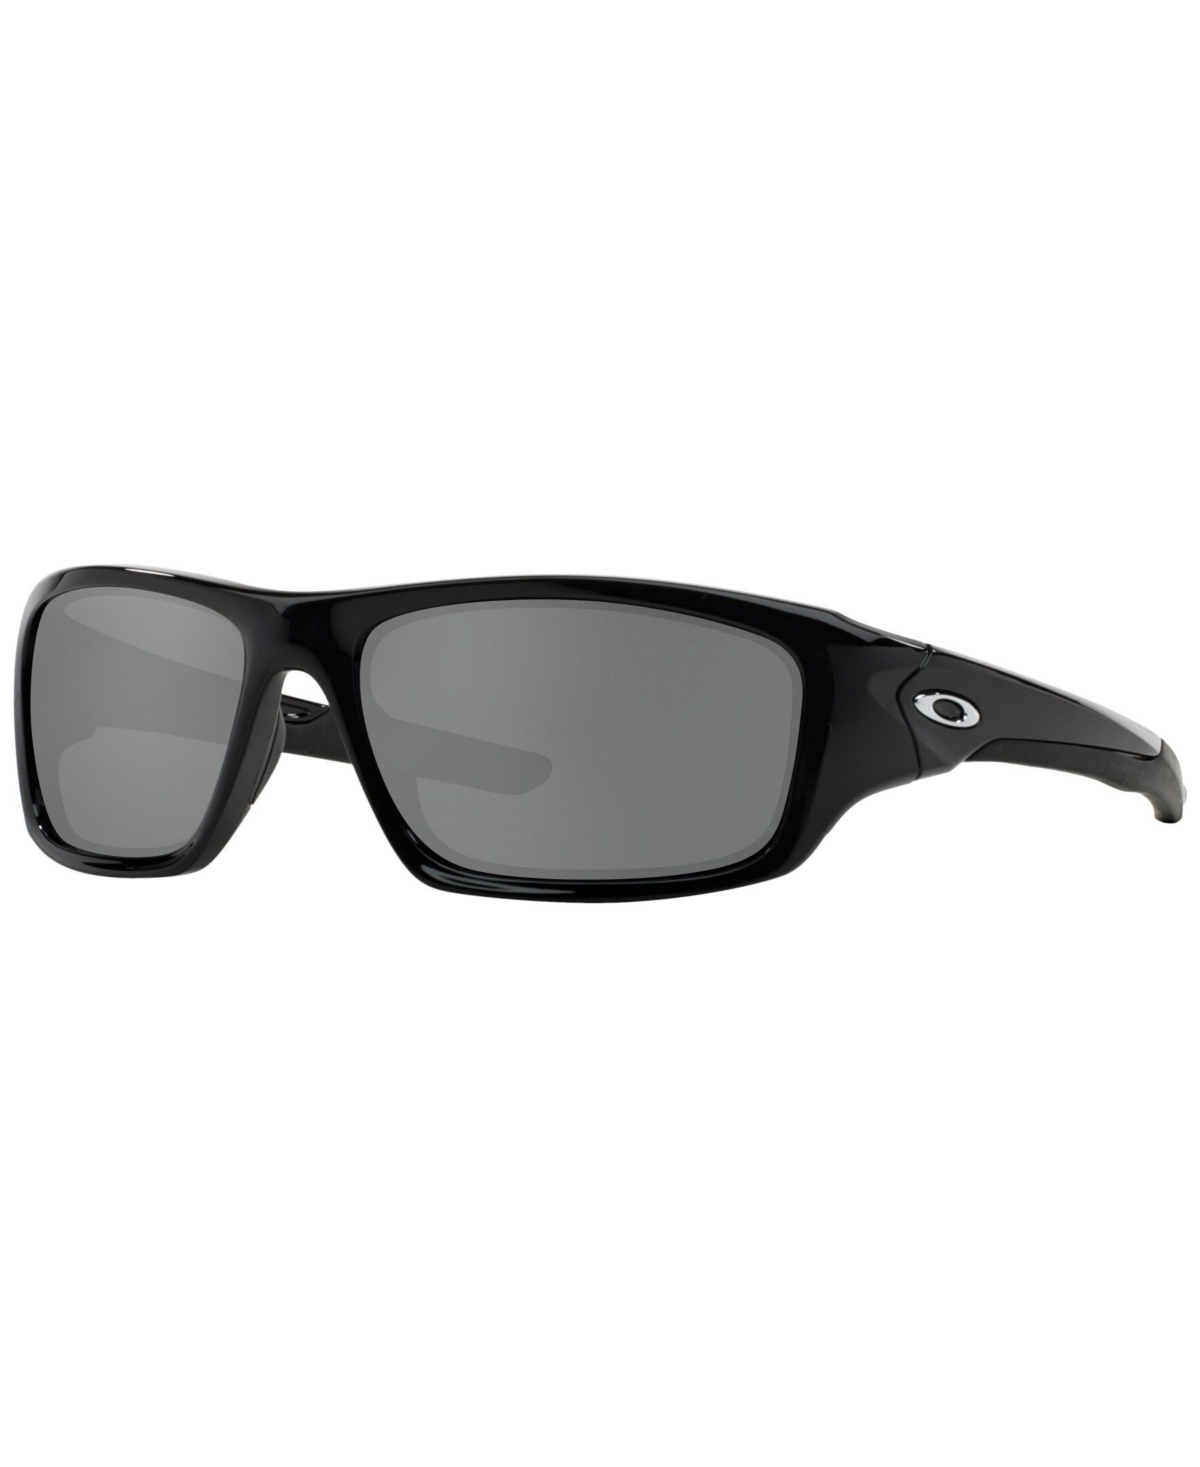 Oakley Men's Rectangle Sunglasses, Oo9236 60 Valve In Black